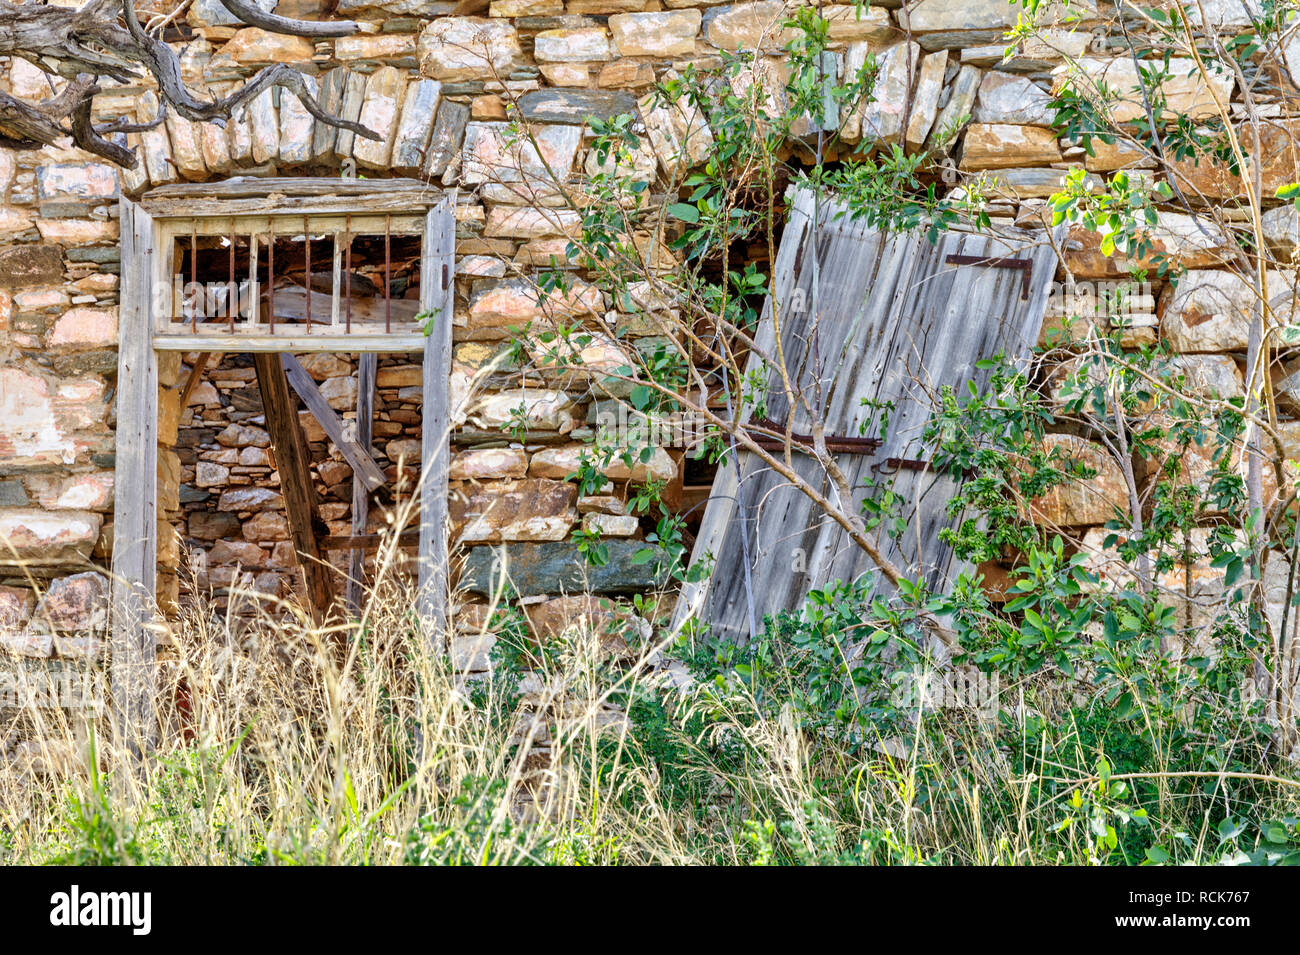 Broken wooden window and door in a derrelict  deserted  urban house with overgrown shrub . Stock Image. Stock Photo